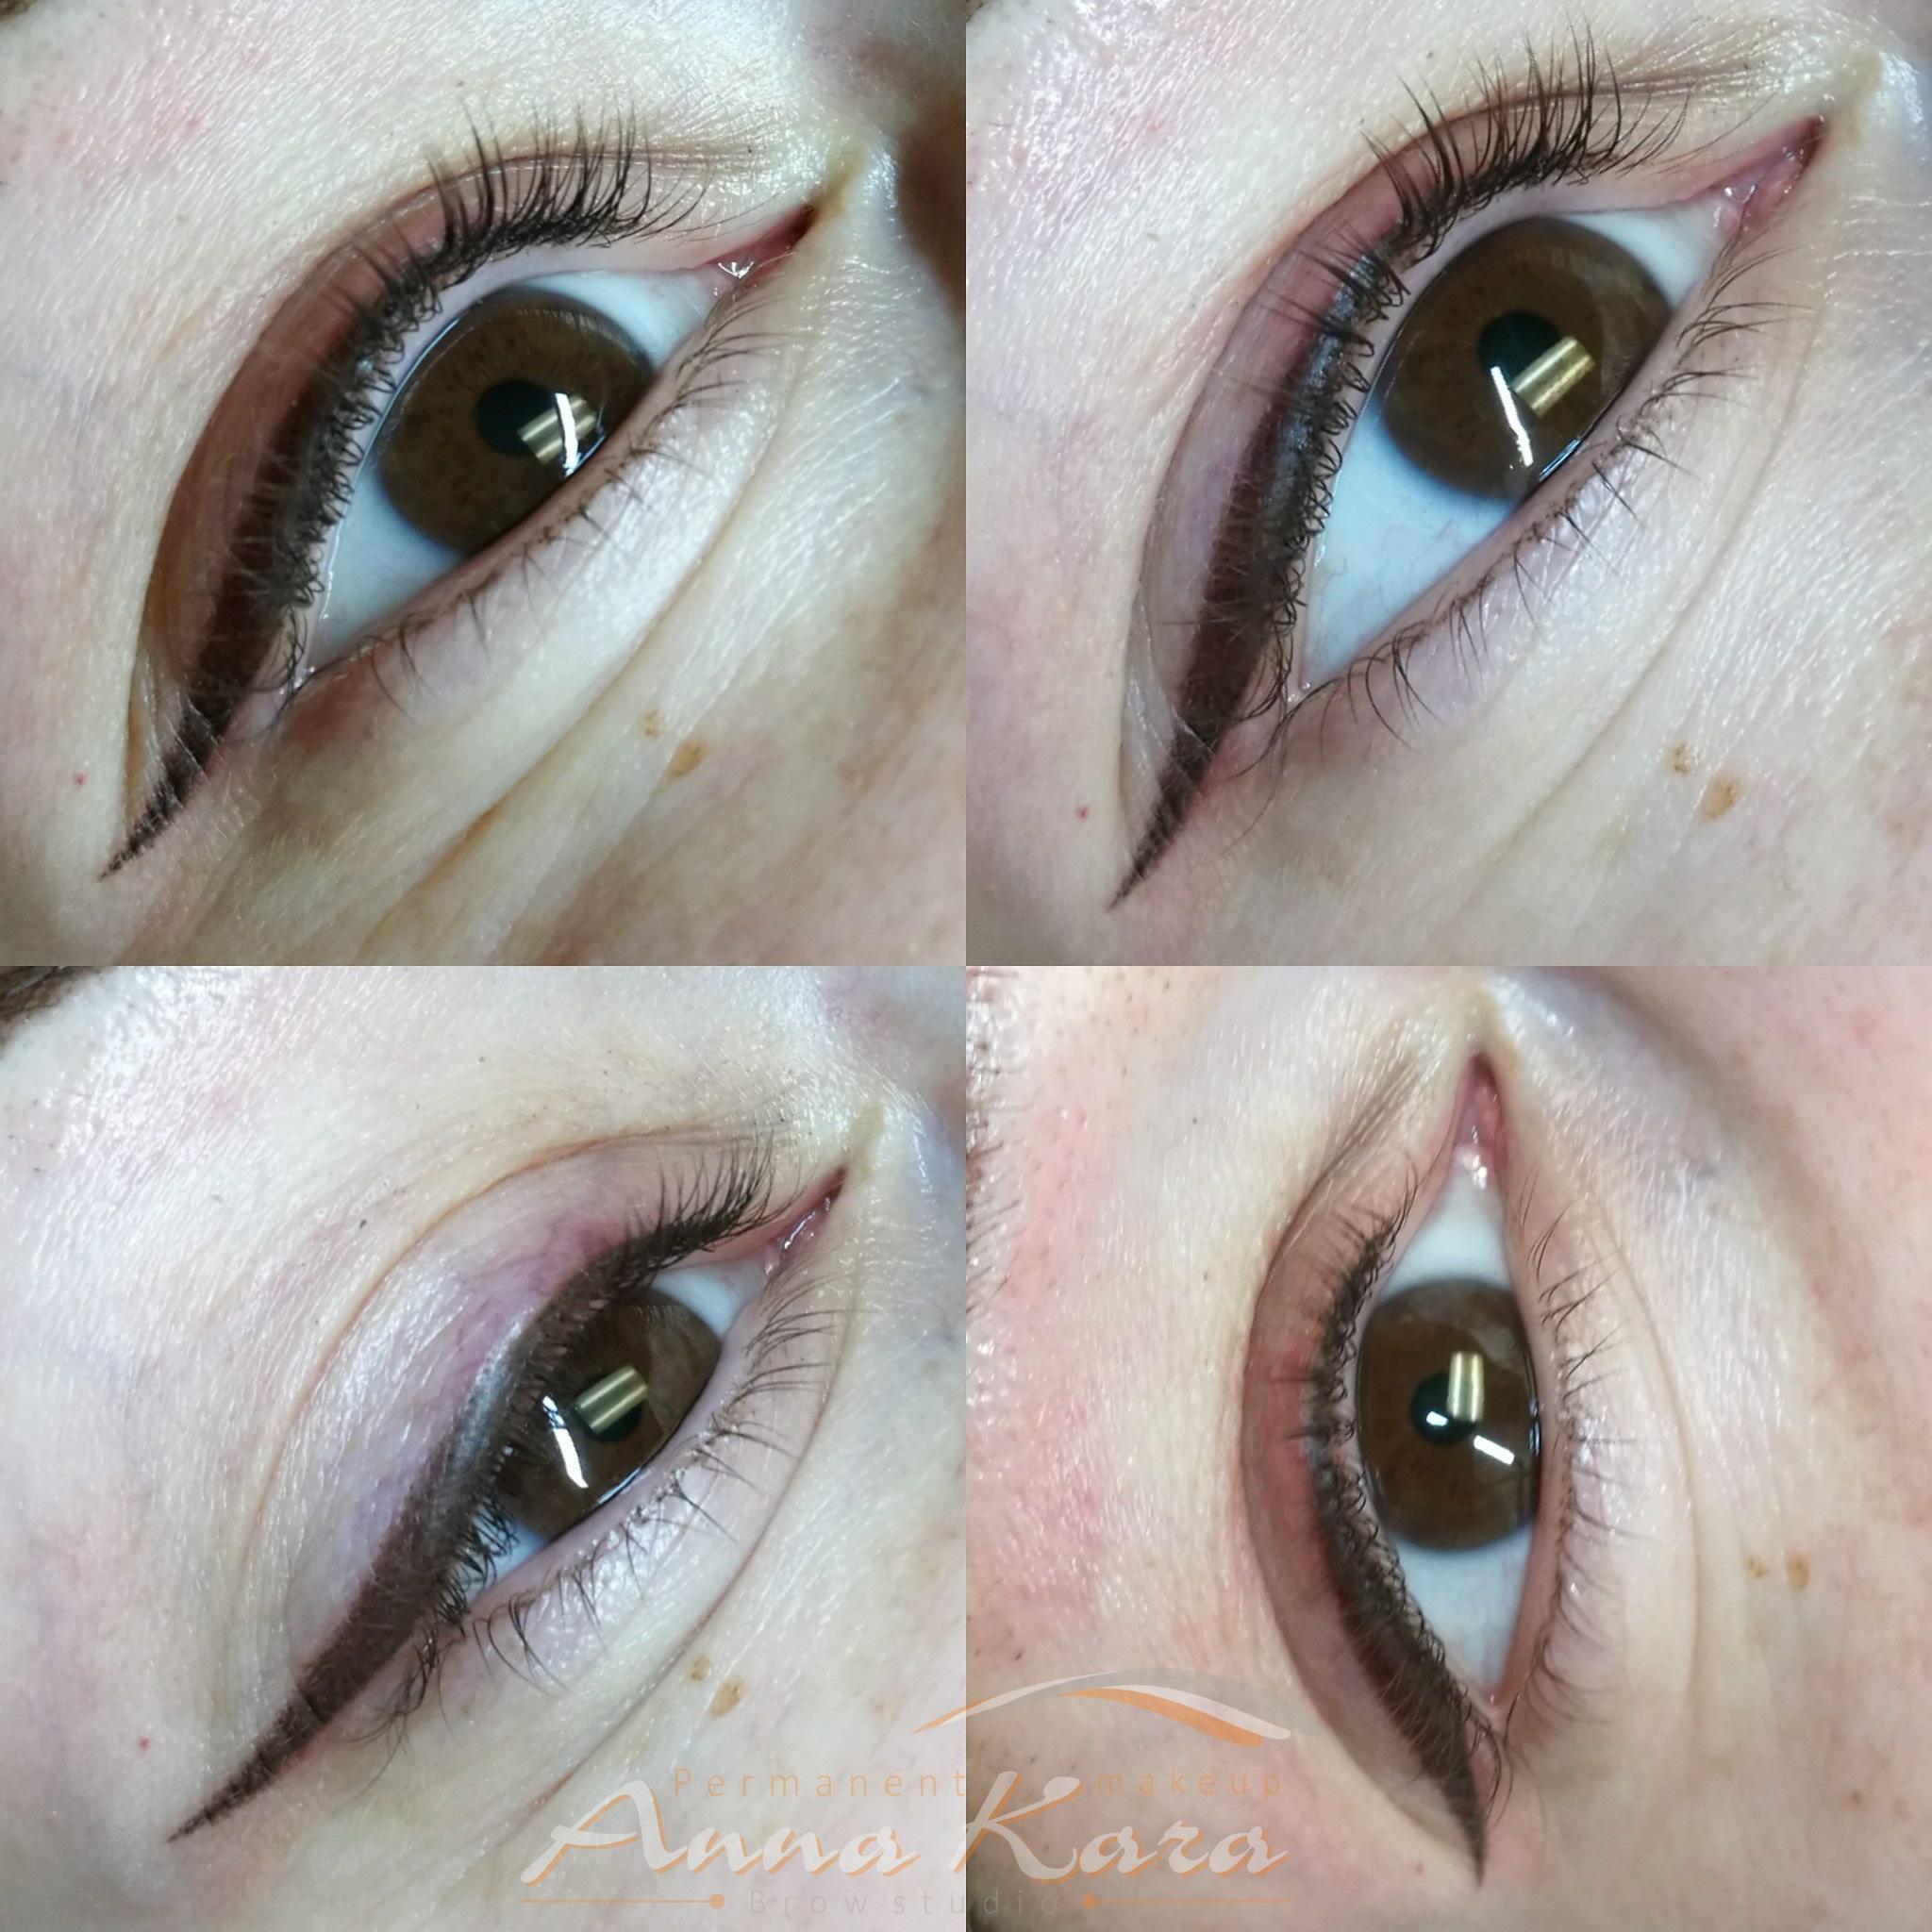 permanent eyeliner upper after the procedure